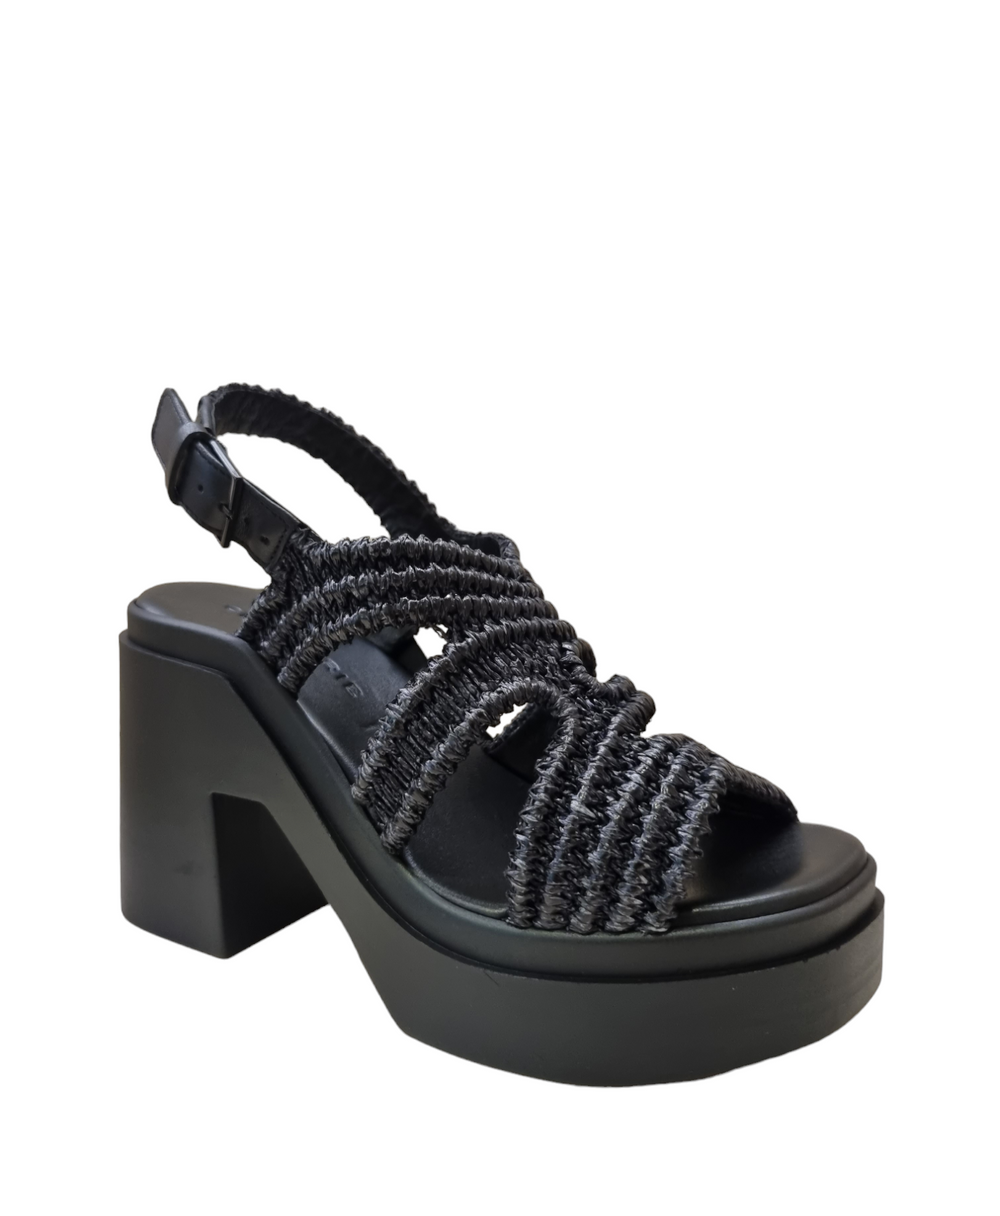 Natsu Black Raffia Platform Sandals - Clergerie - Liberty Shoes Australia